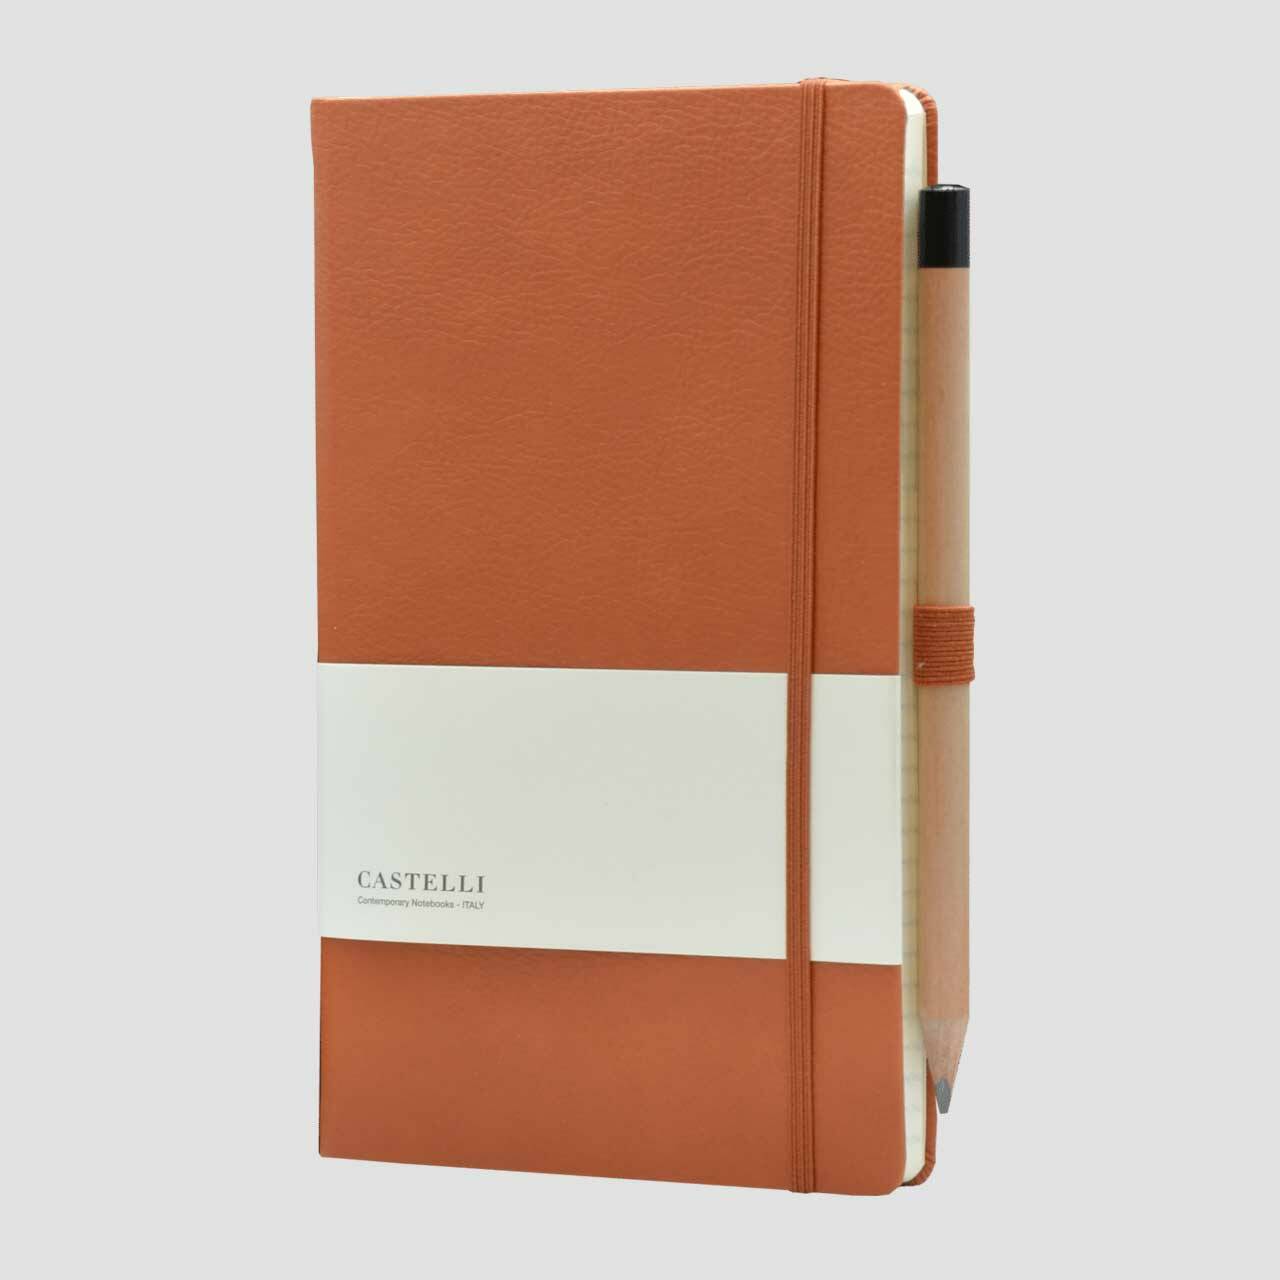 Castelli notitieboek lederlook met banderol en potlood met houder, bruin